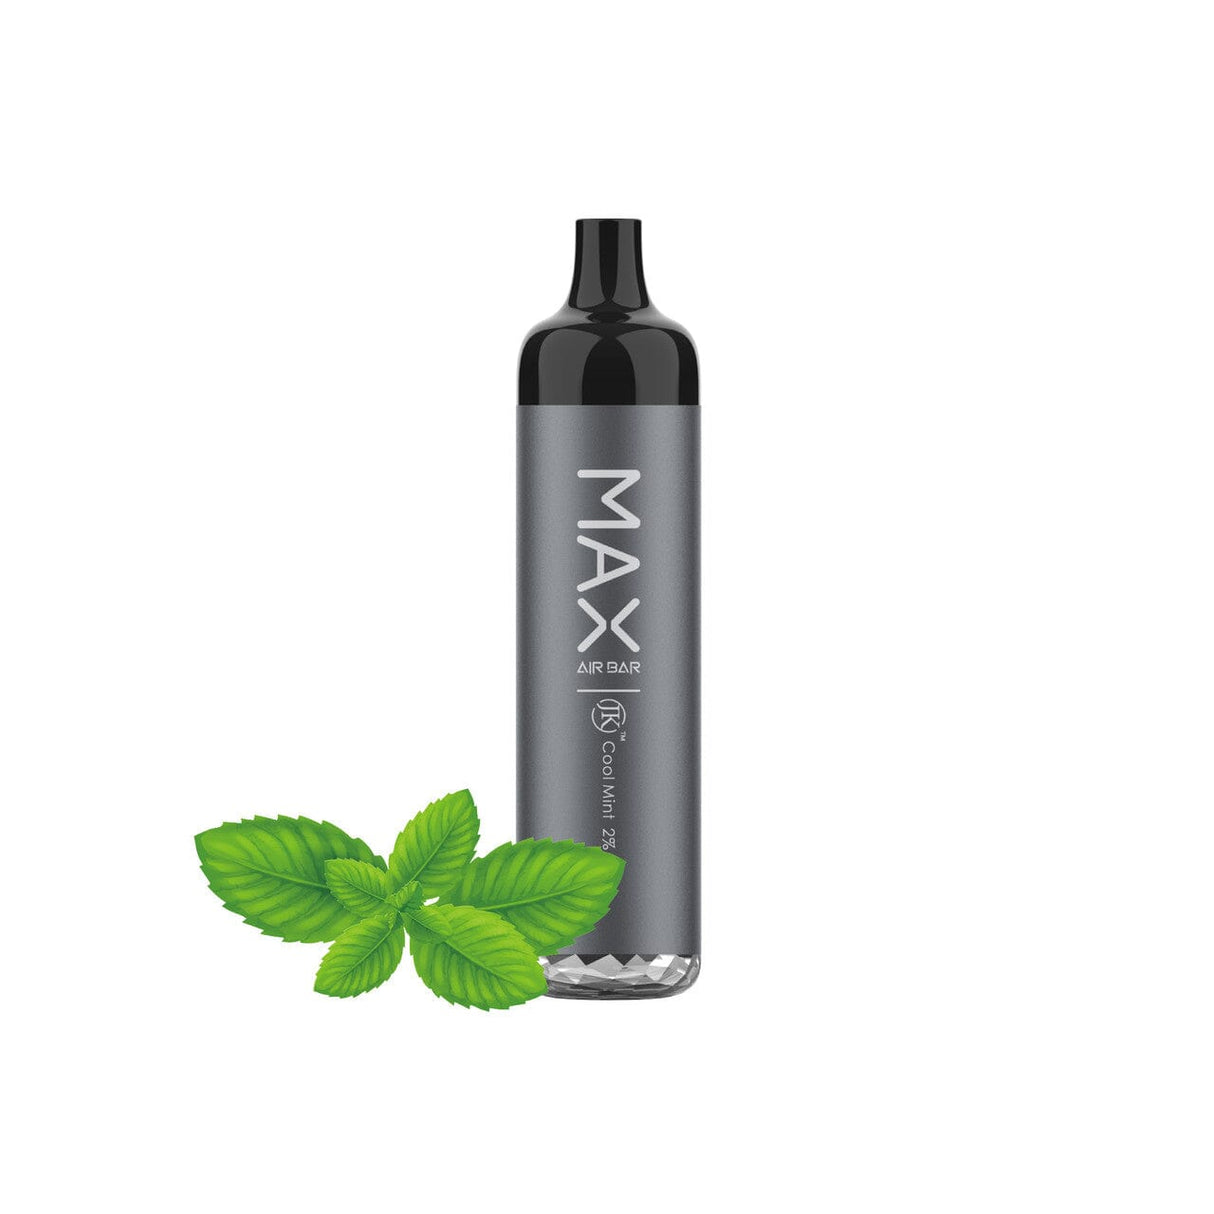 Air bar Max Cool Mint Flavor - Disposable Vape